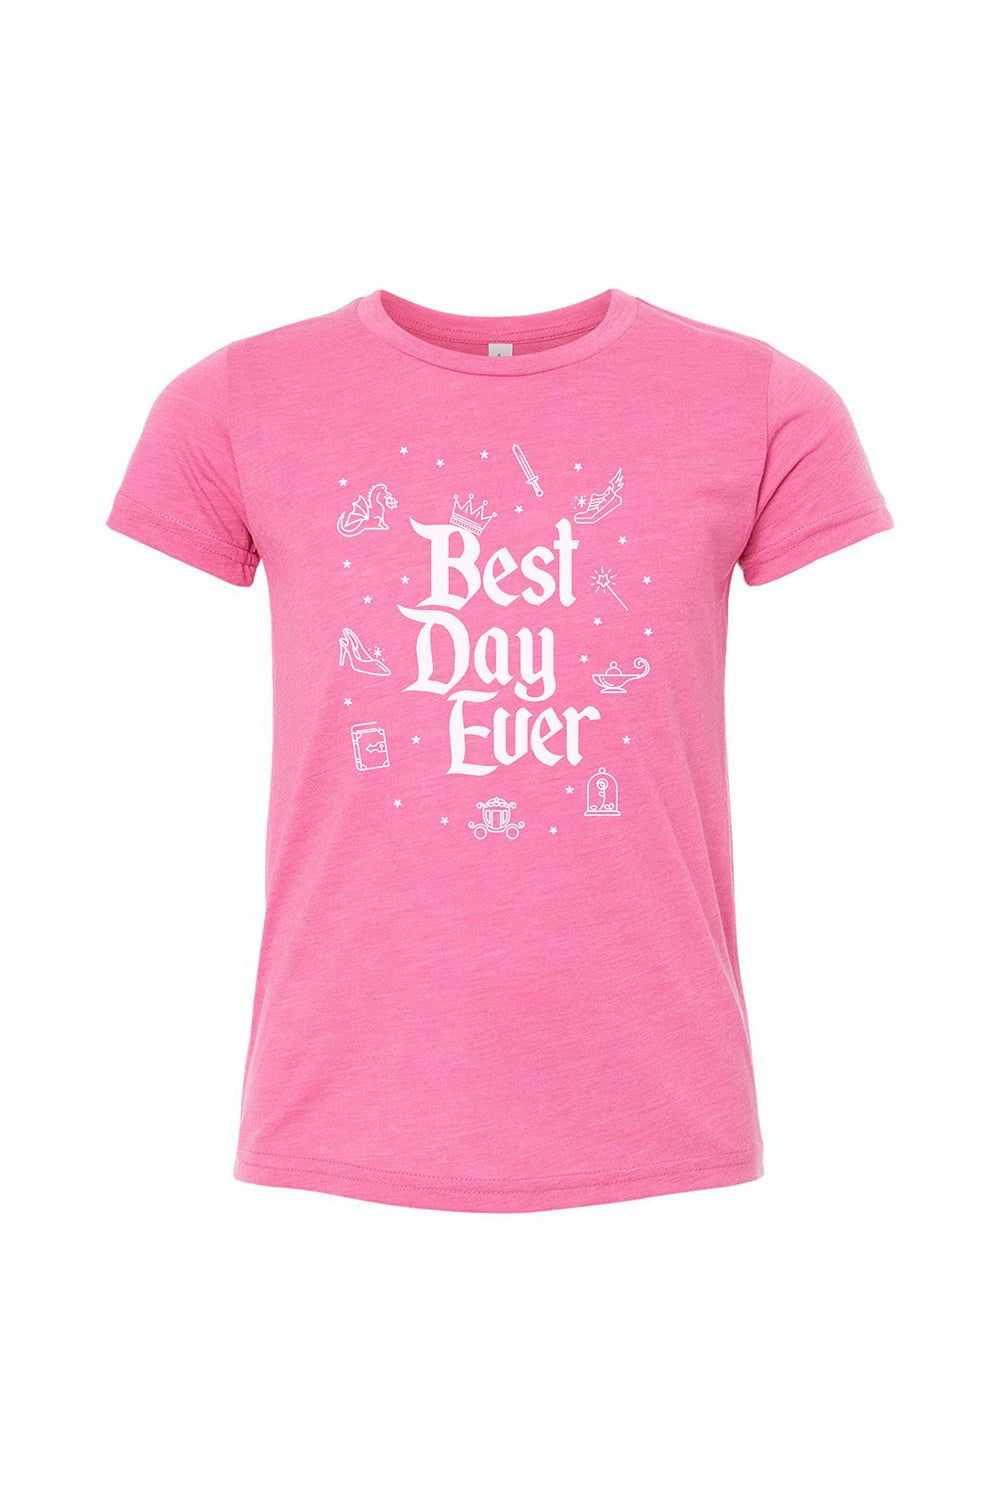 Sarah Marie Design Studio Kids Best Day Ever Kids/Youth T-shirt